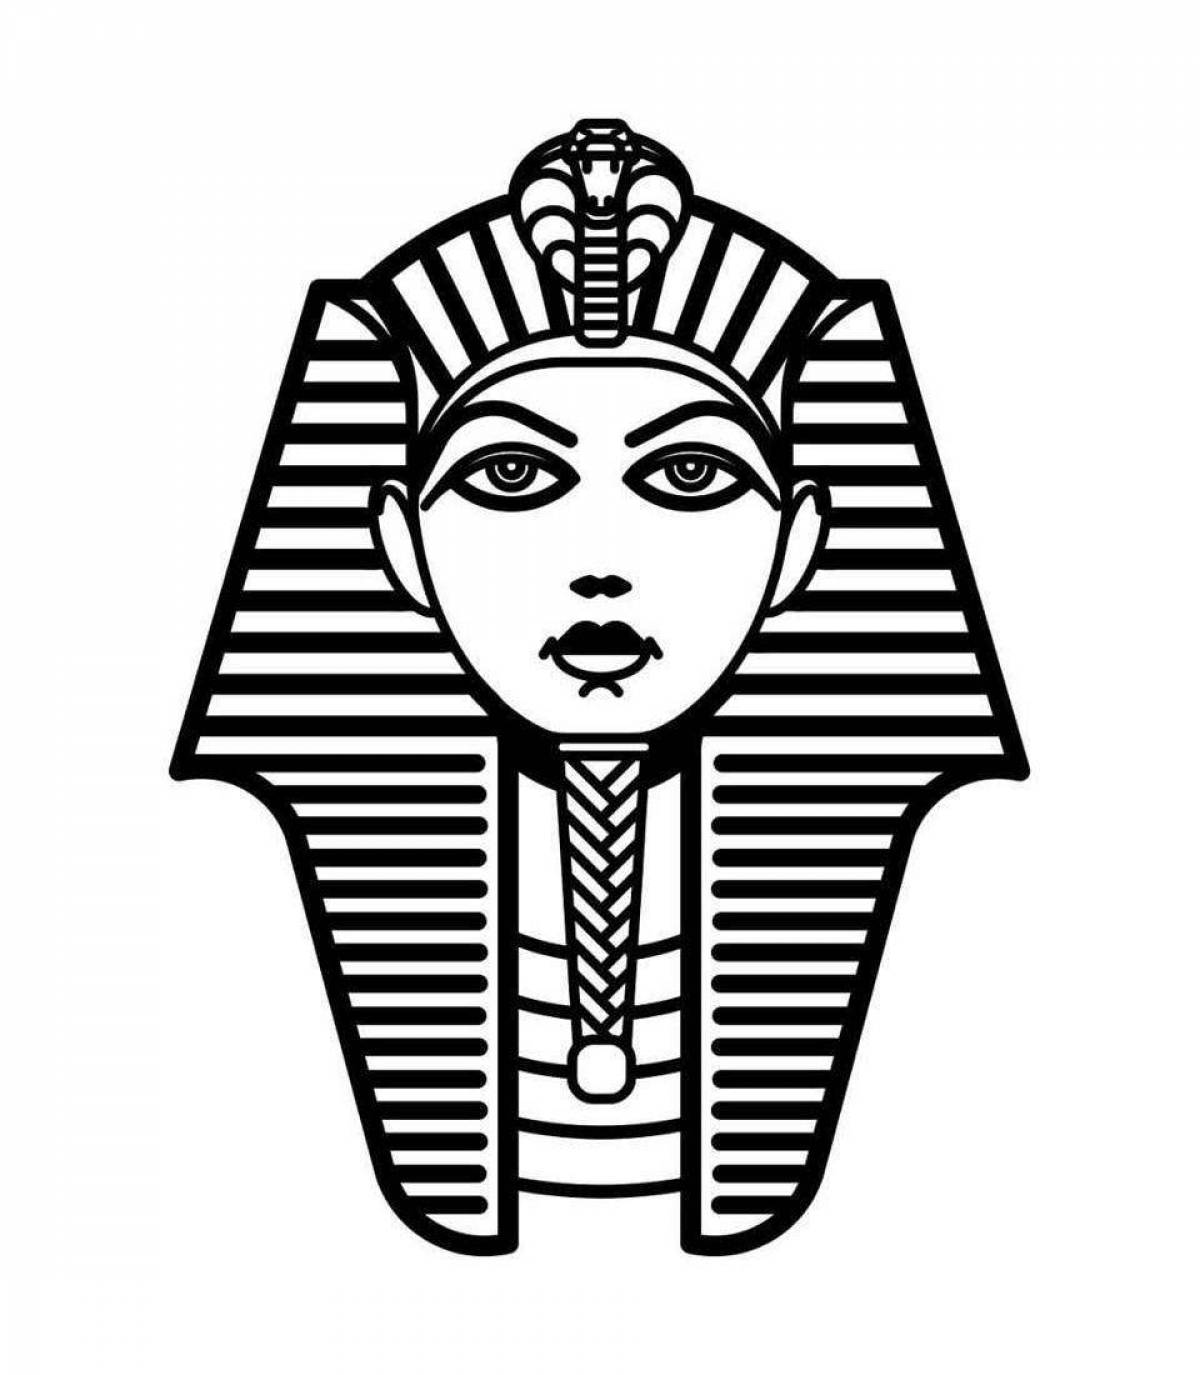 Coloring page exquisite mask of Pharaoh Tutankhamun